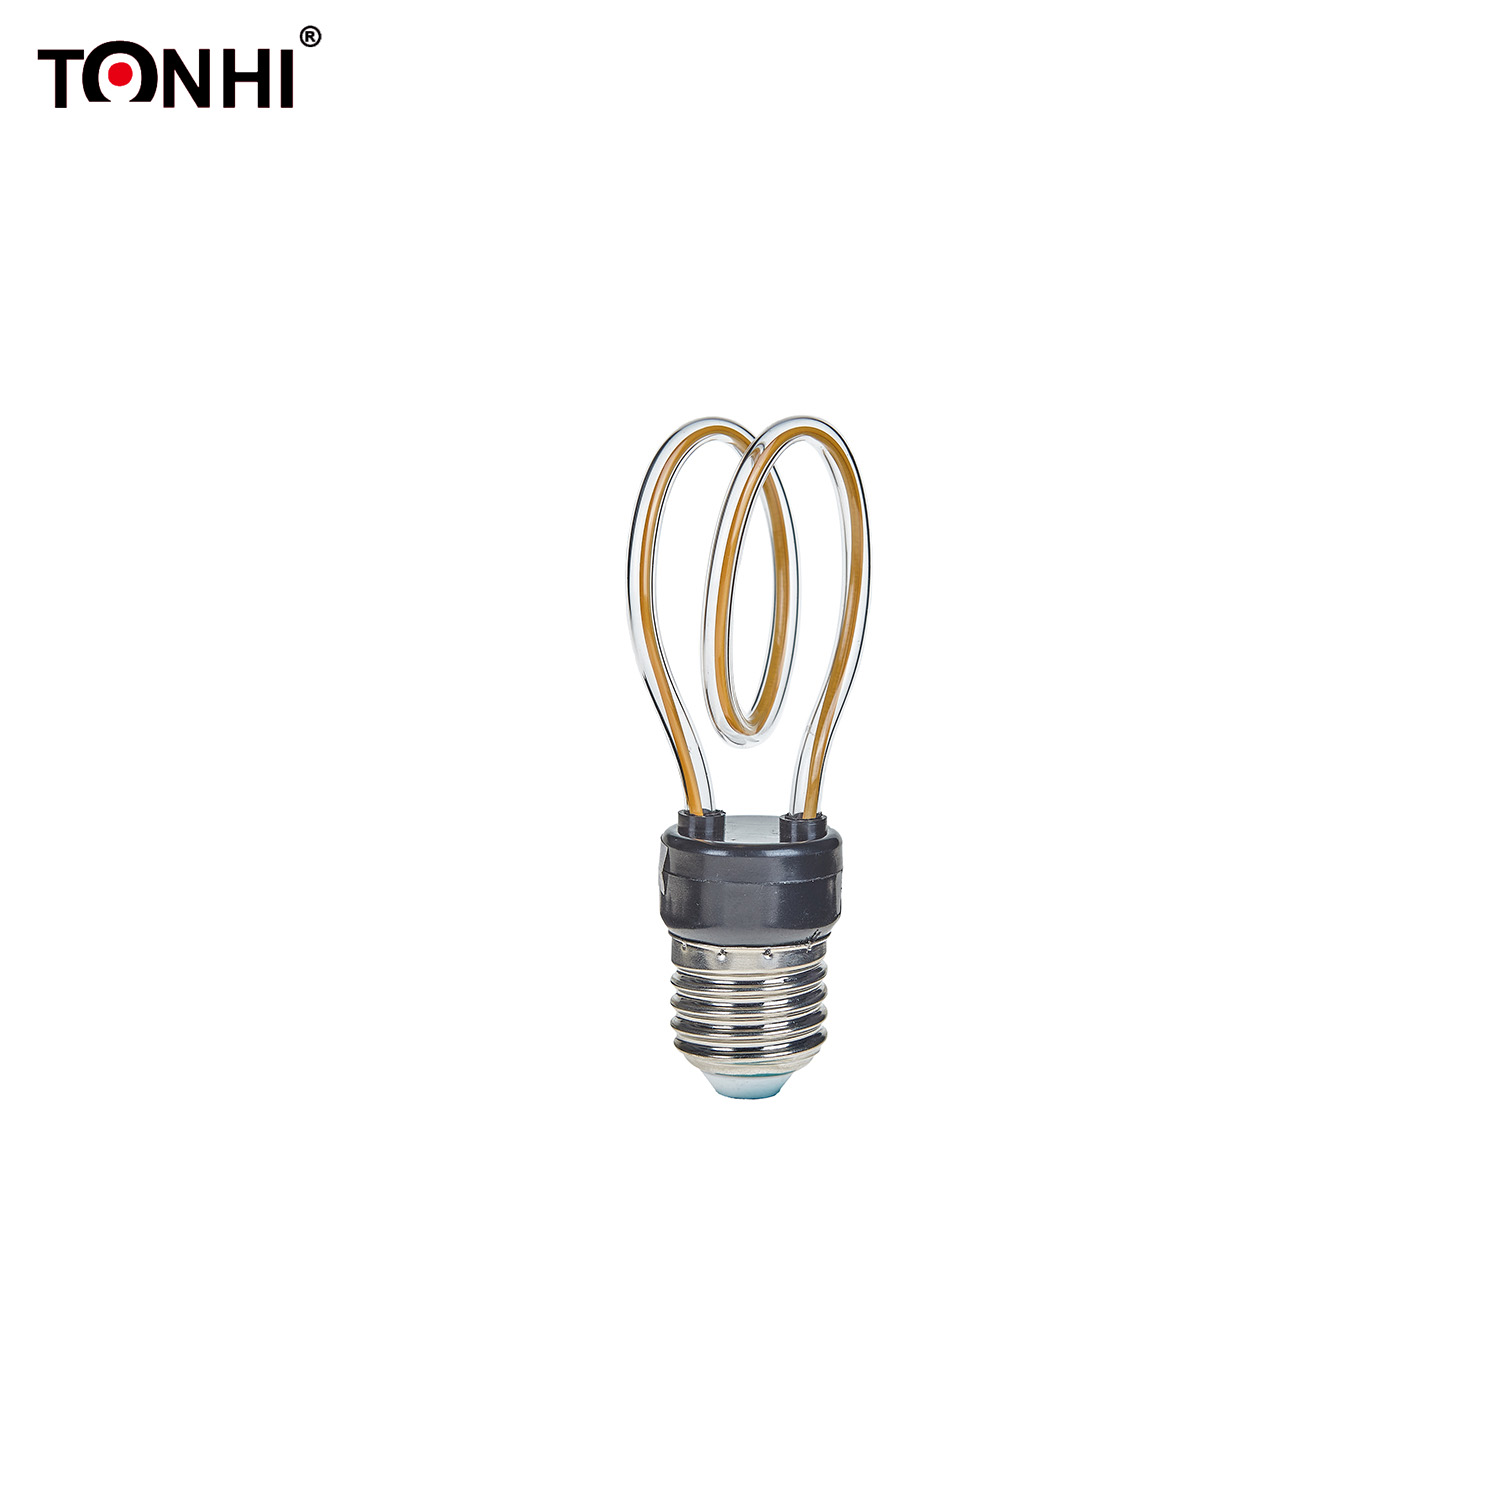 Filamento de Edison con forma de corazón 6W bombillas de luz 220V blanco cálido